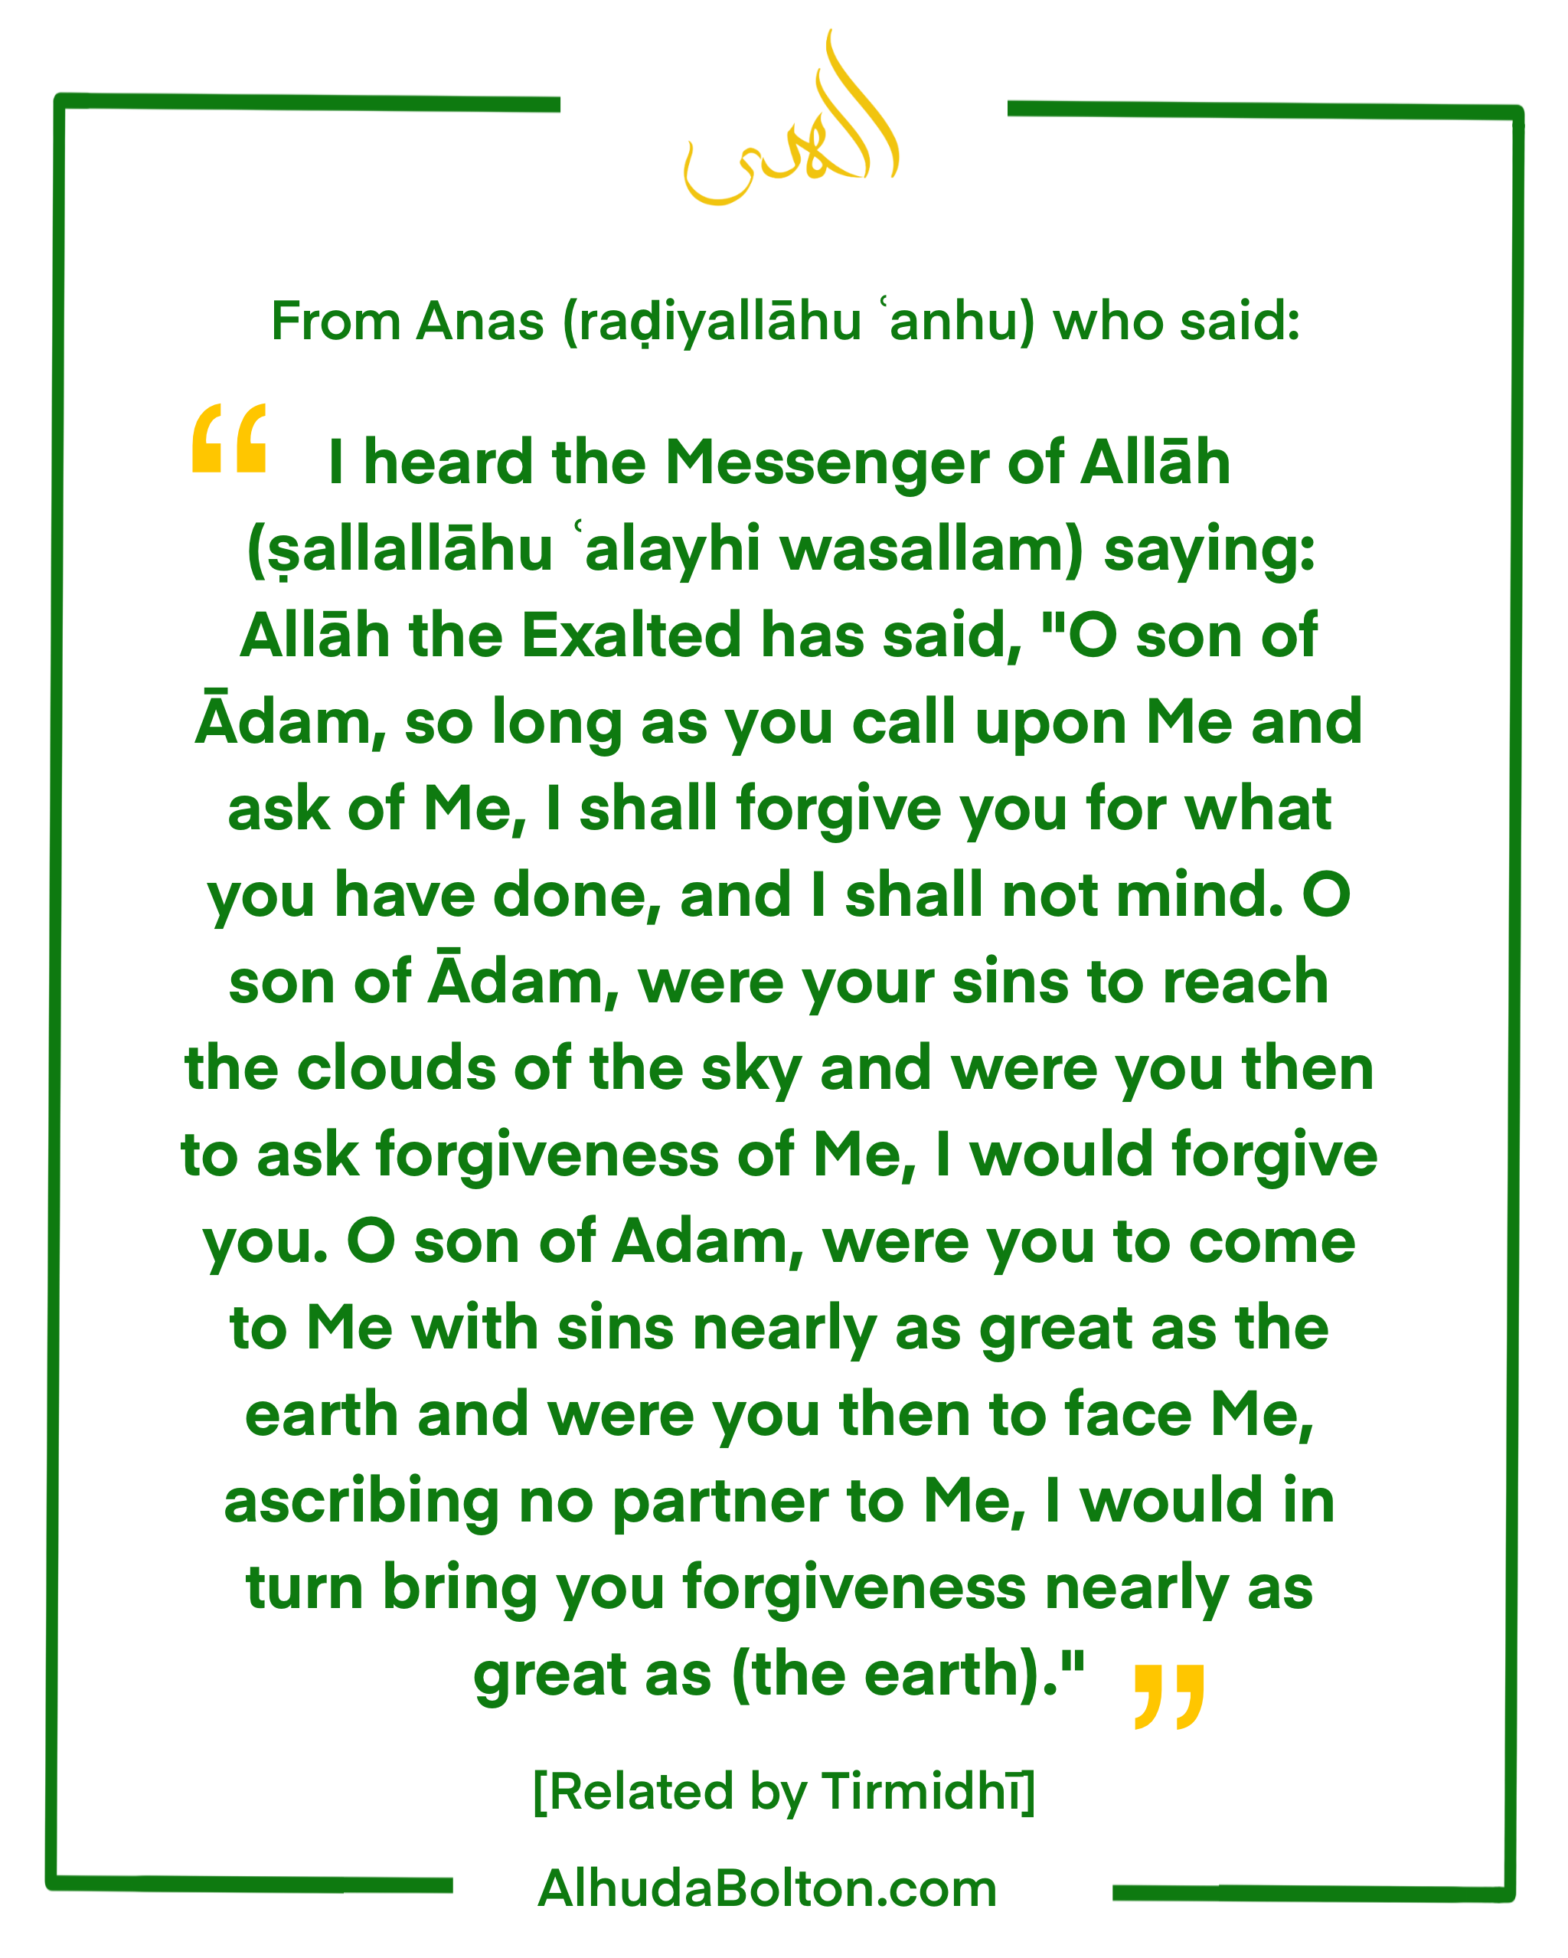 Weekly Hadith: “…I shall forgive you”